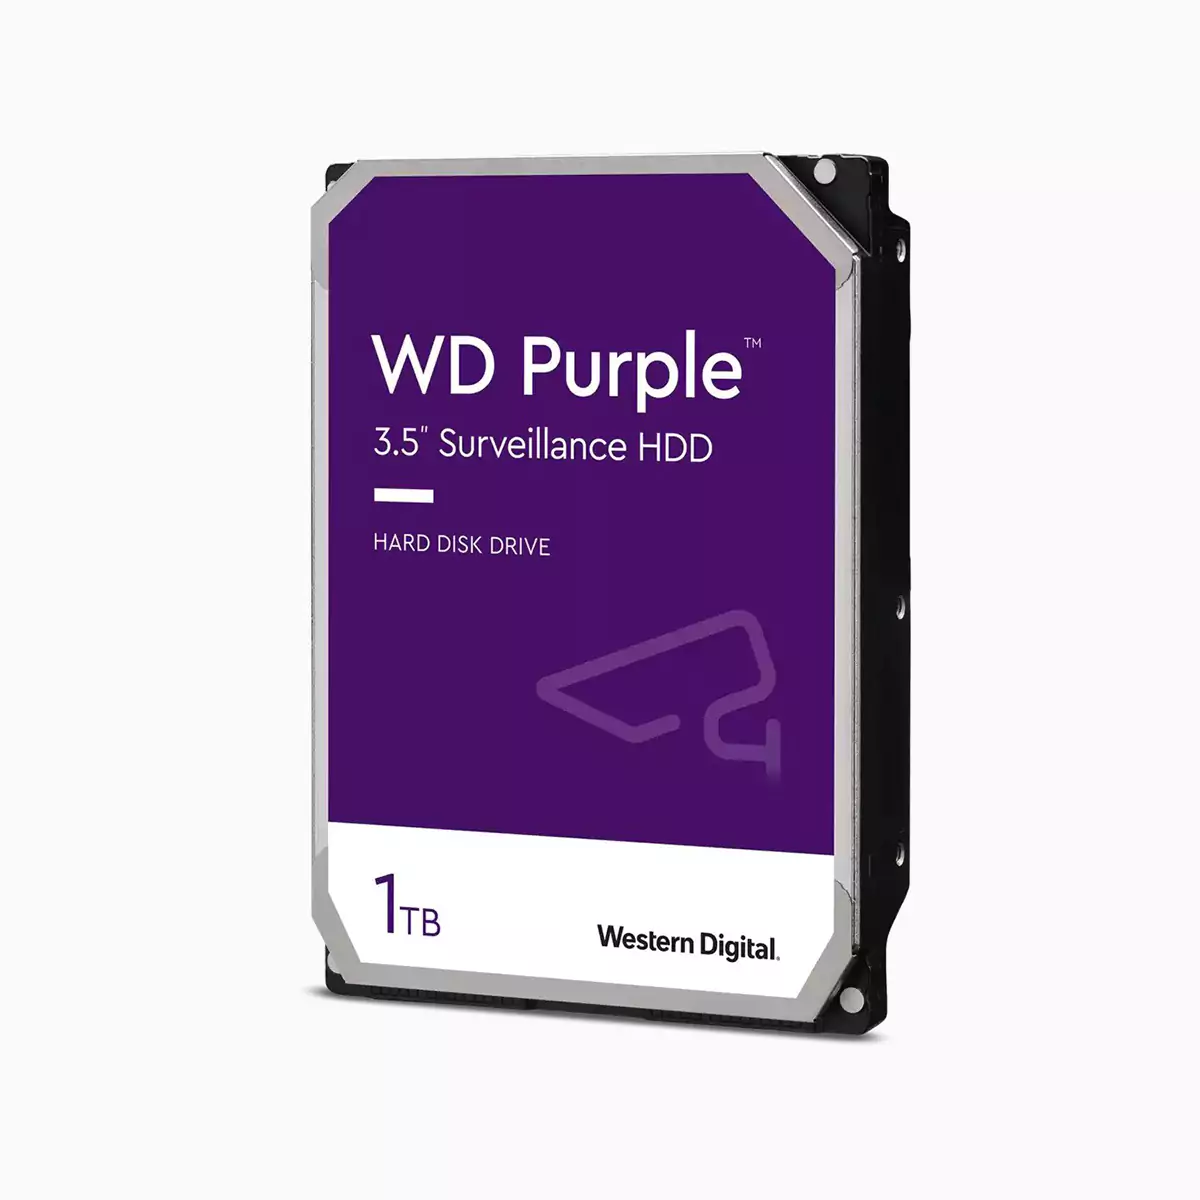 WD Purple 1TB 3.5-inch SATA III Hard Drive for Surveillance